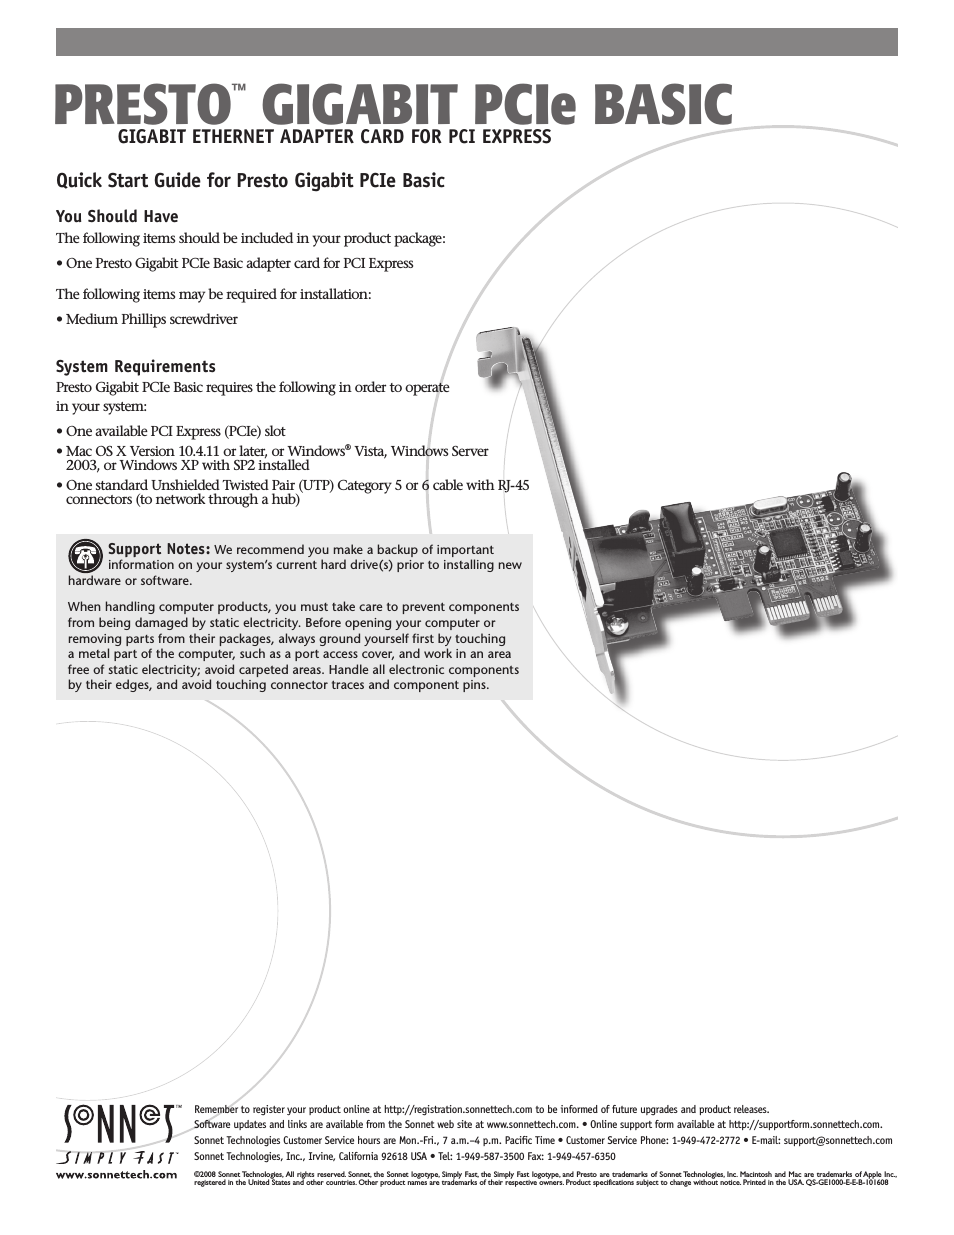 Presto Gigabit PCIe Basic Gigabit Ethernet Adapter Card